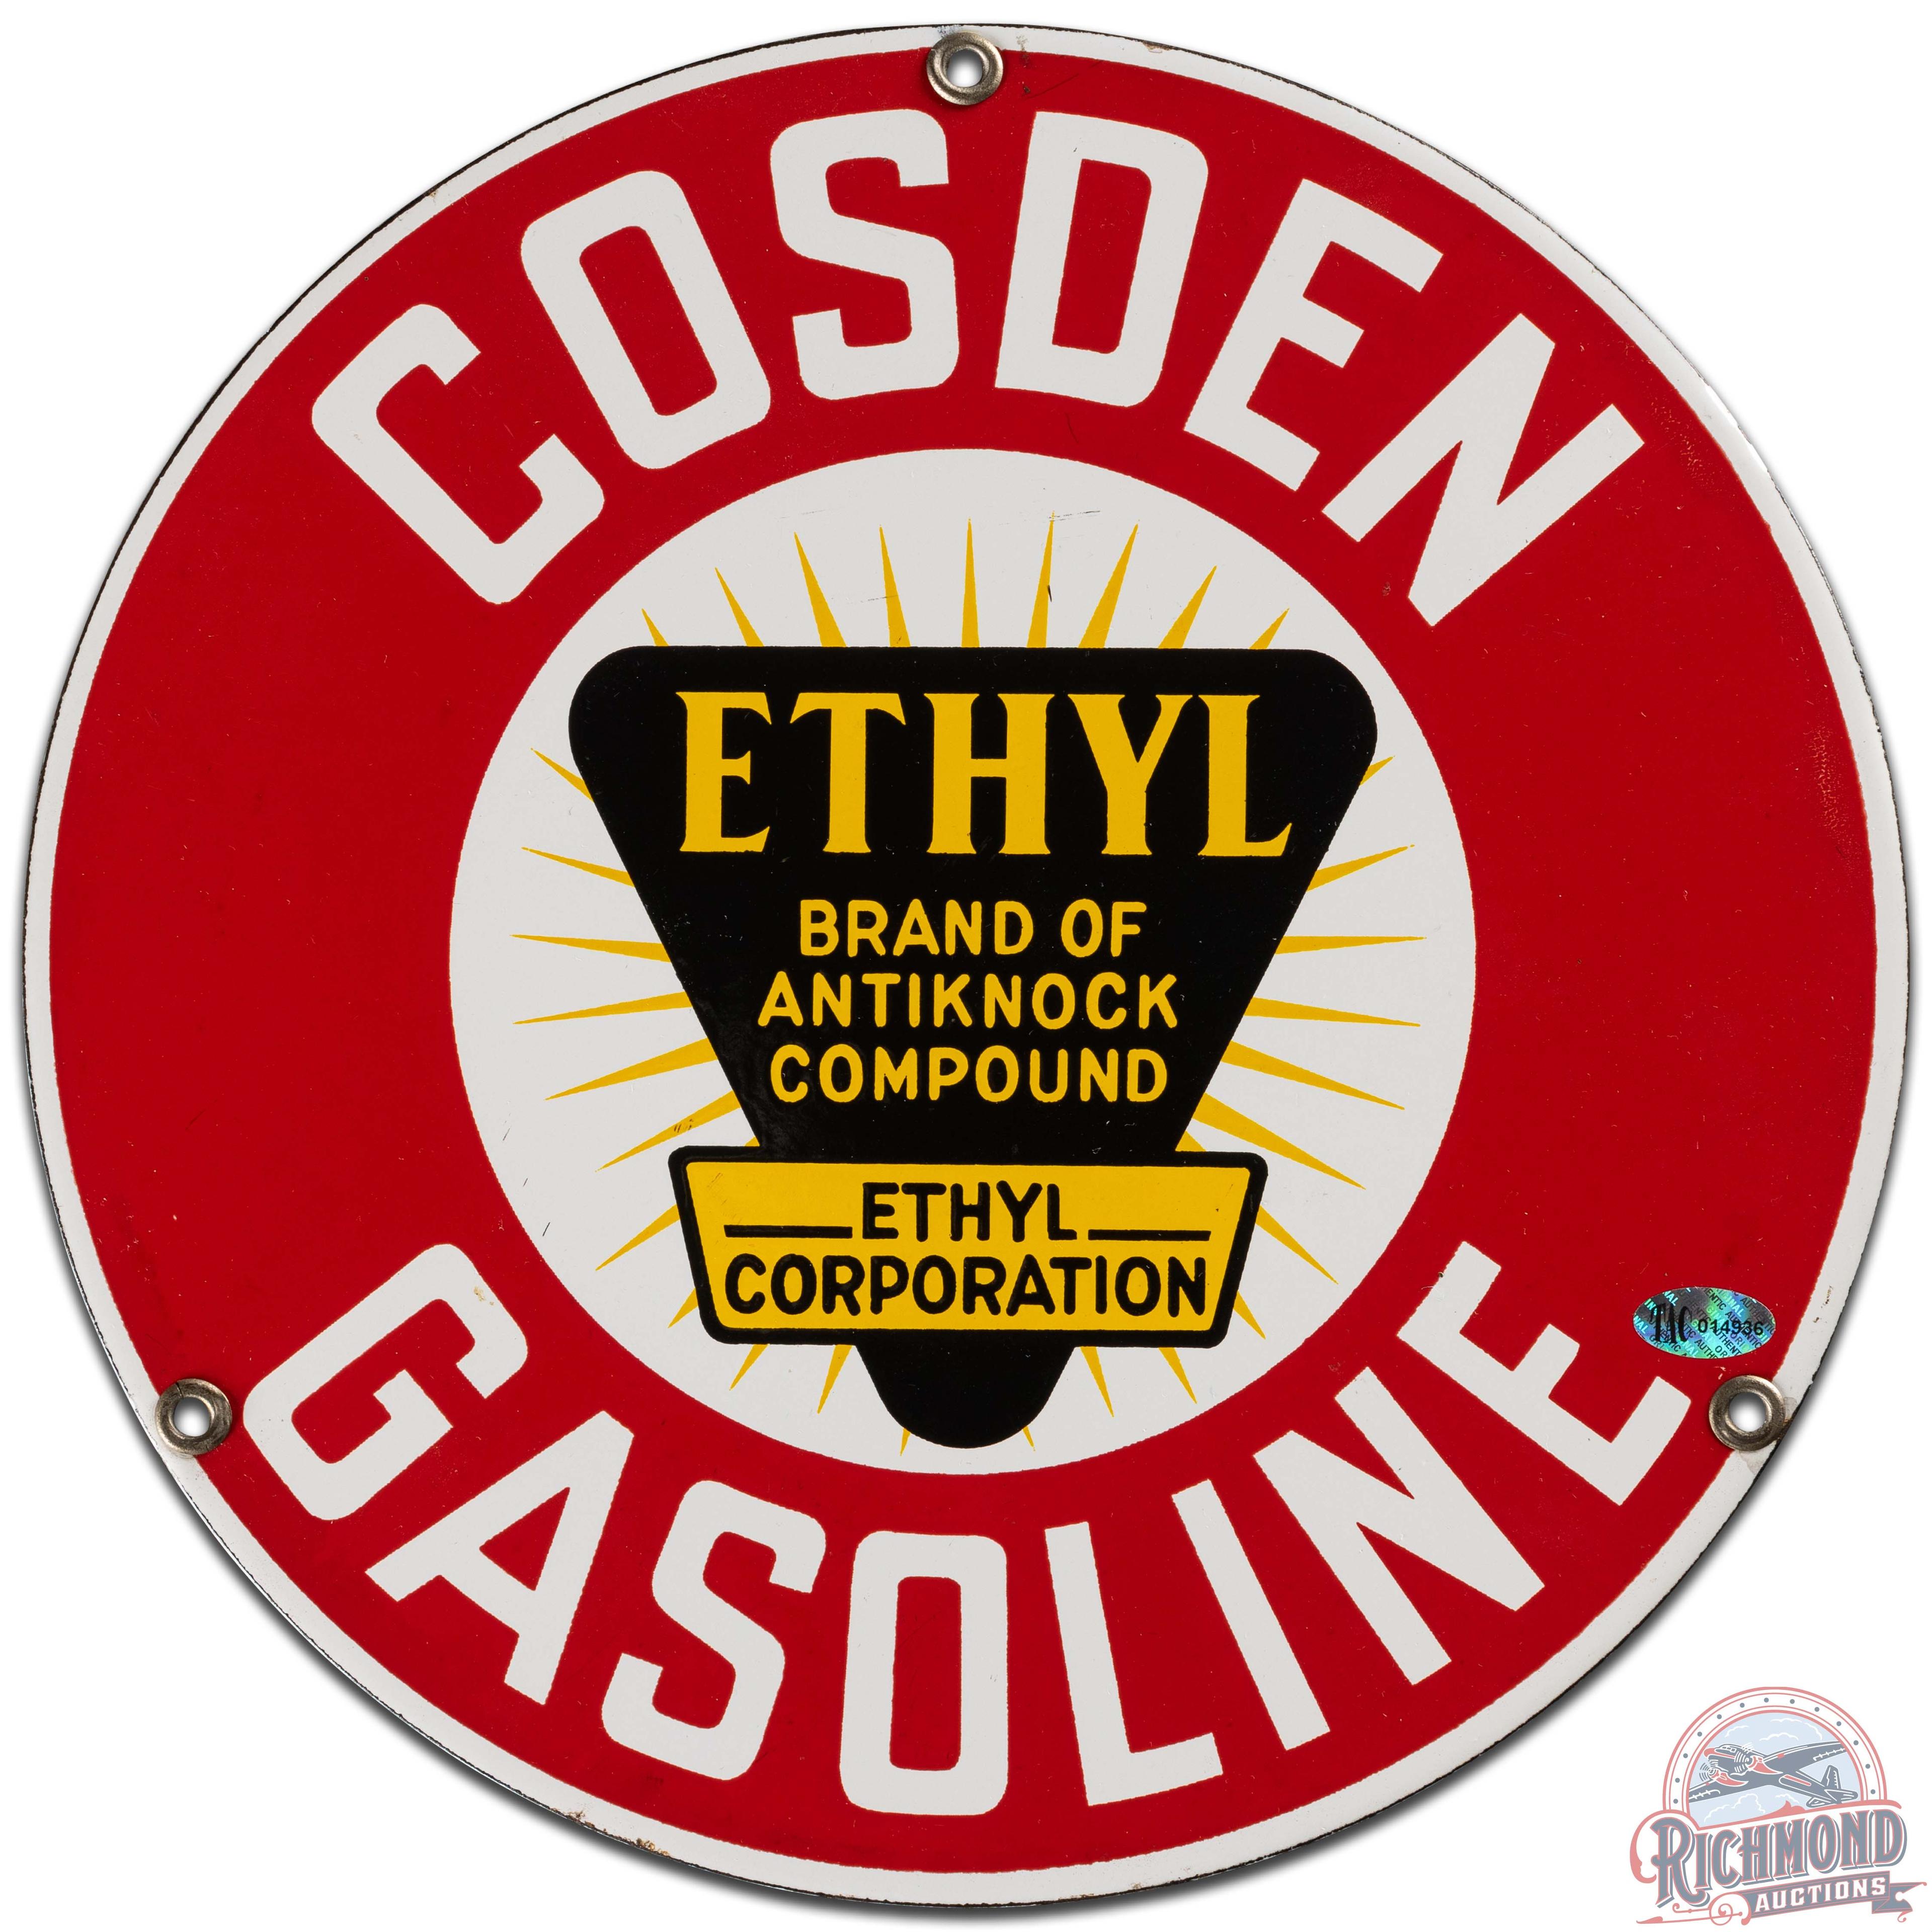 Cosden Ethyl Gasoline SS Porcelain Pump Plate Sign w/ Logo